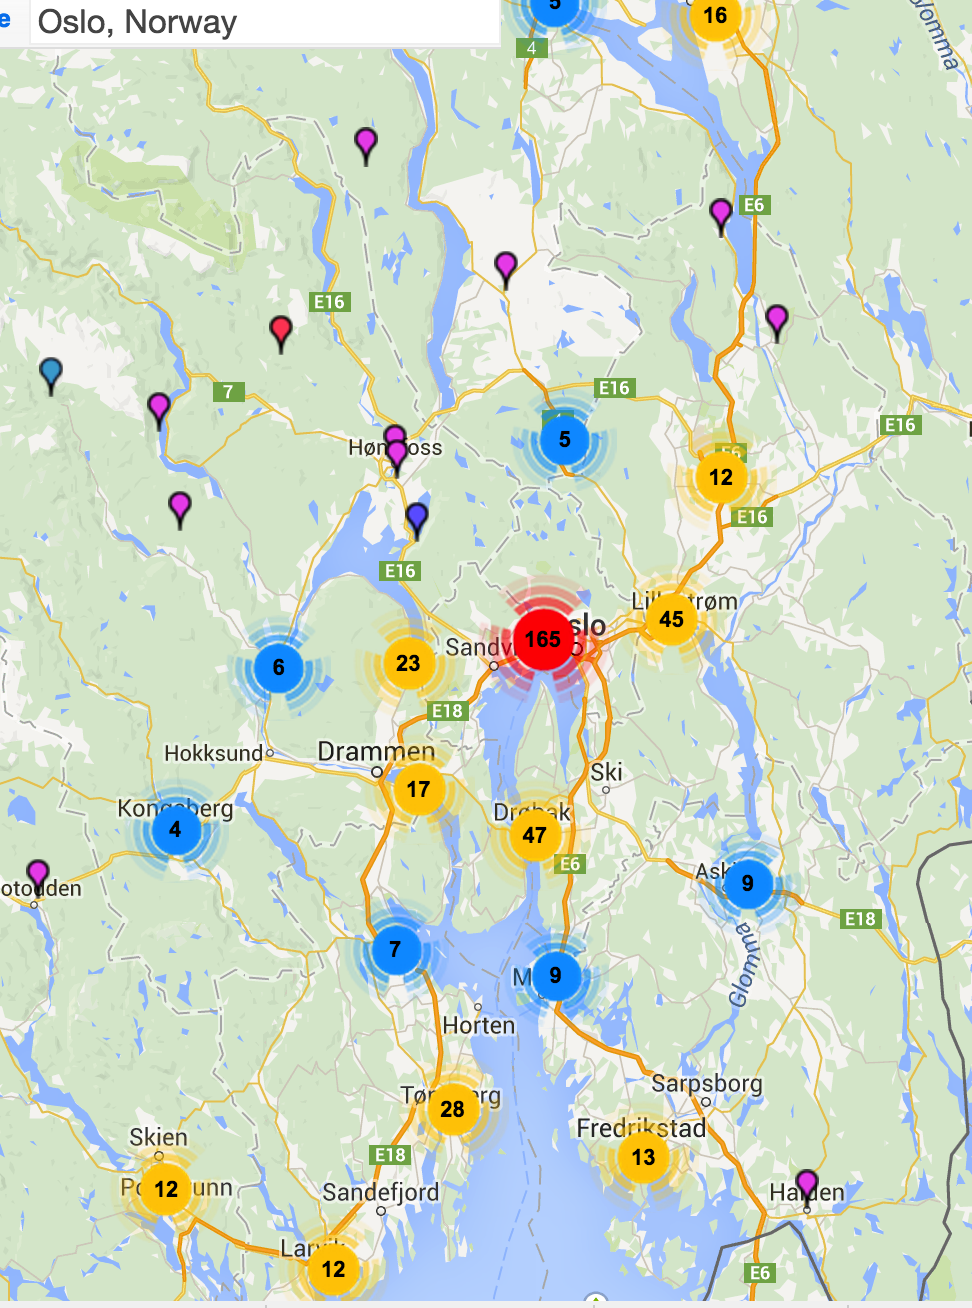 Oslo Area ZeeMap.png